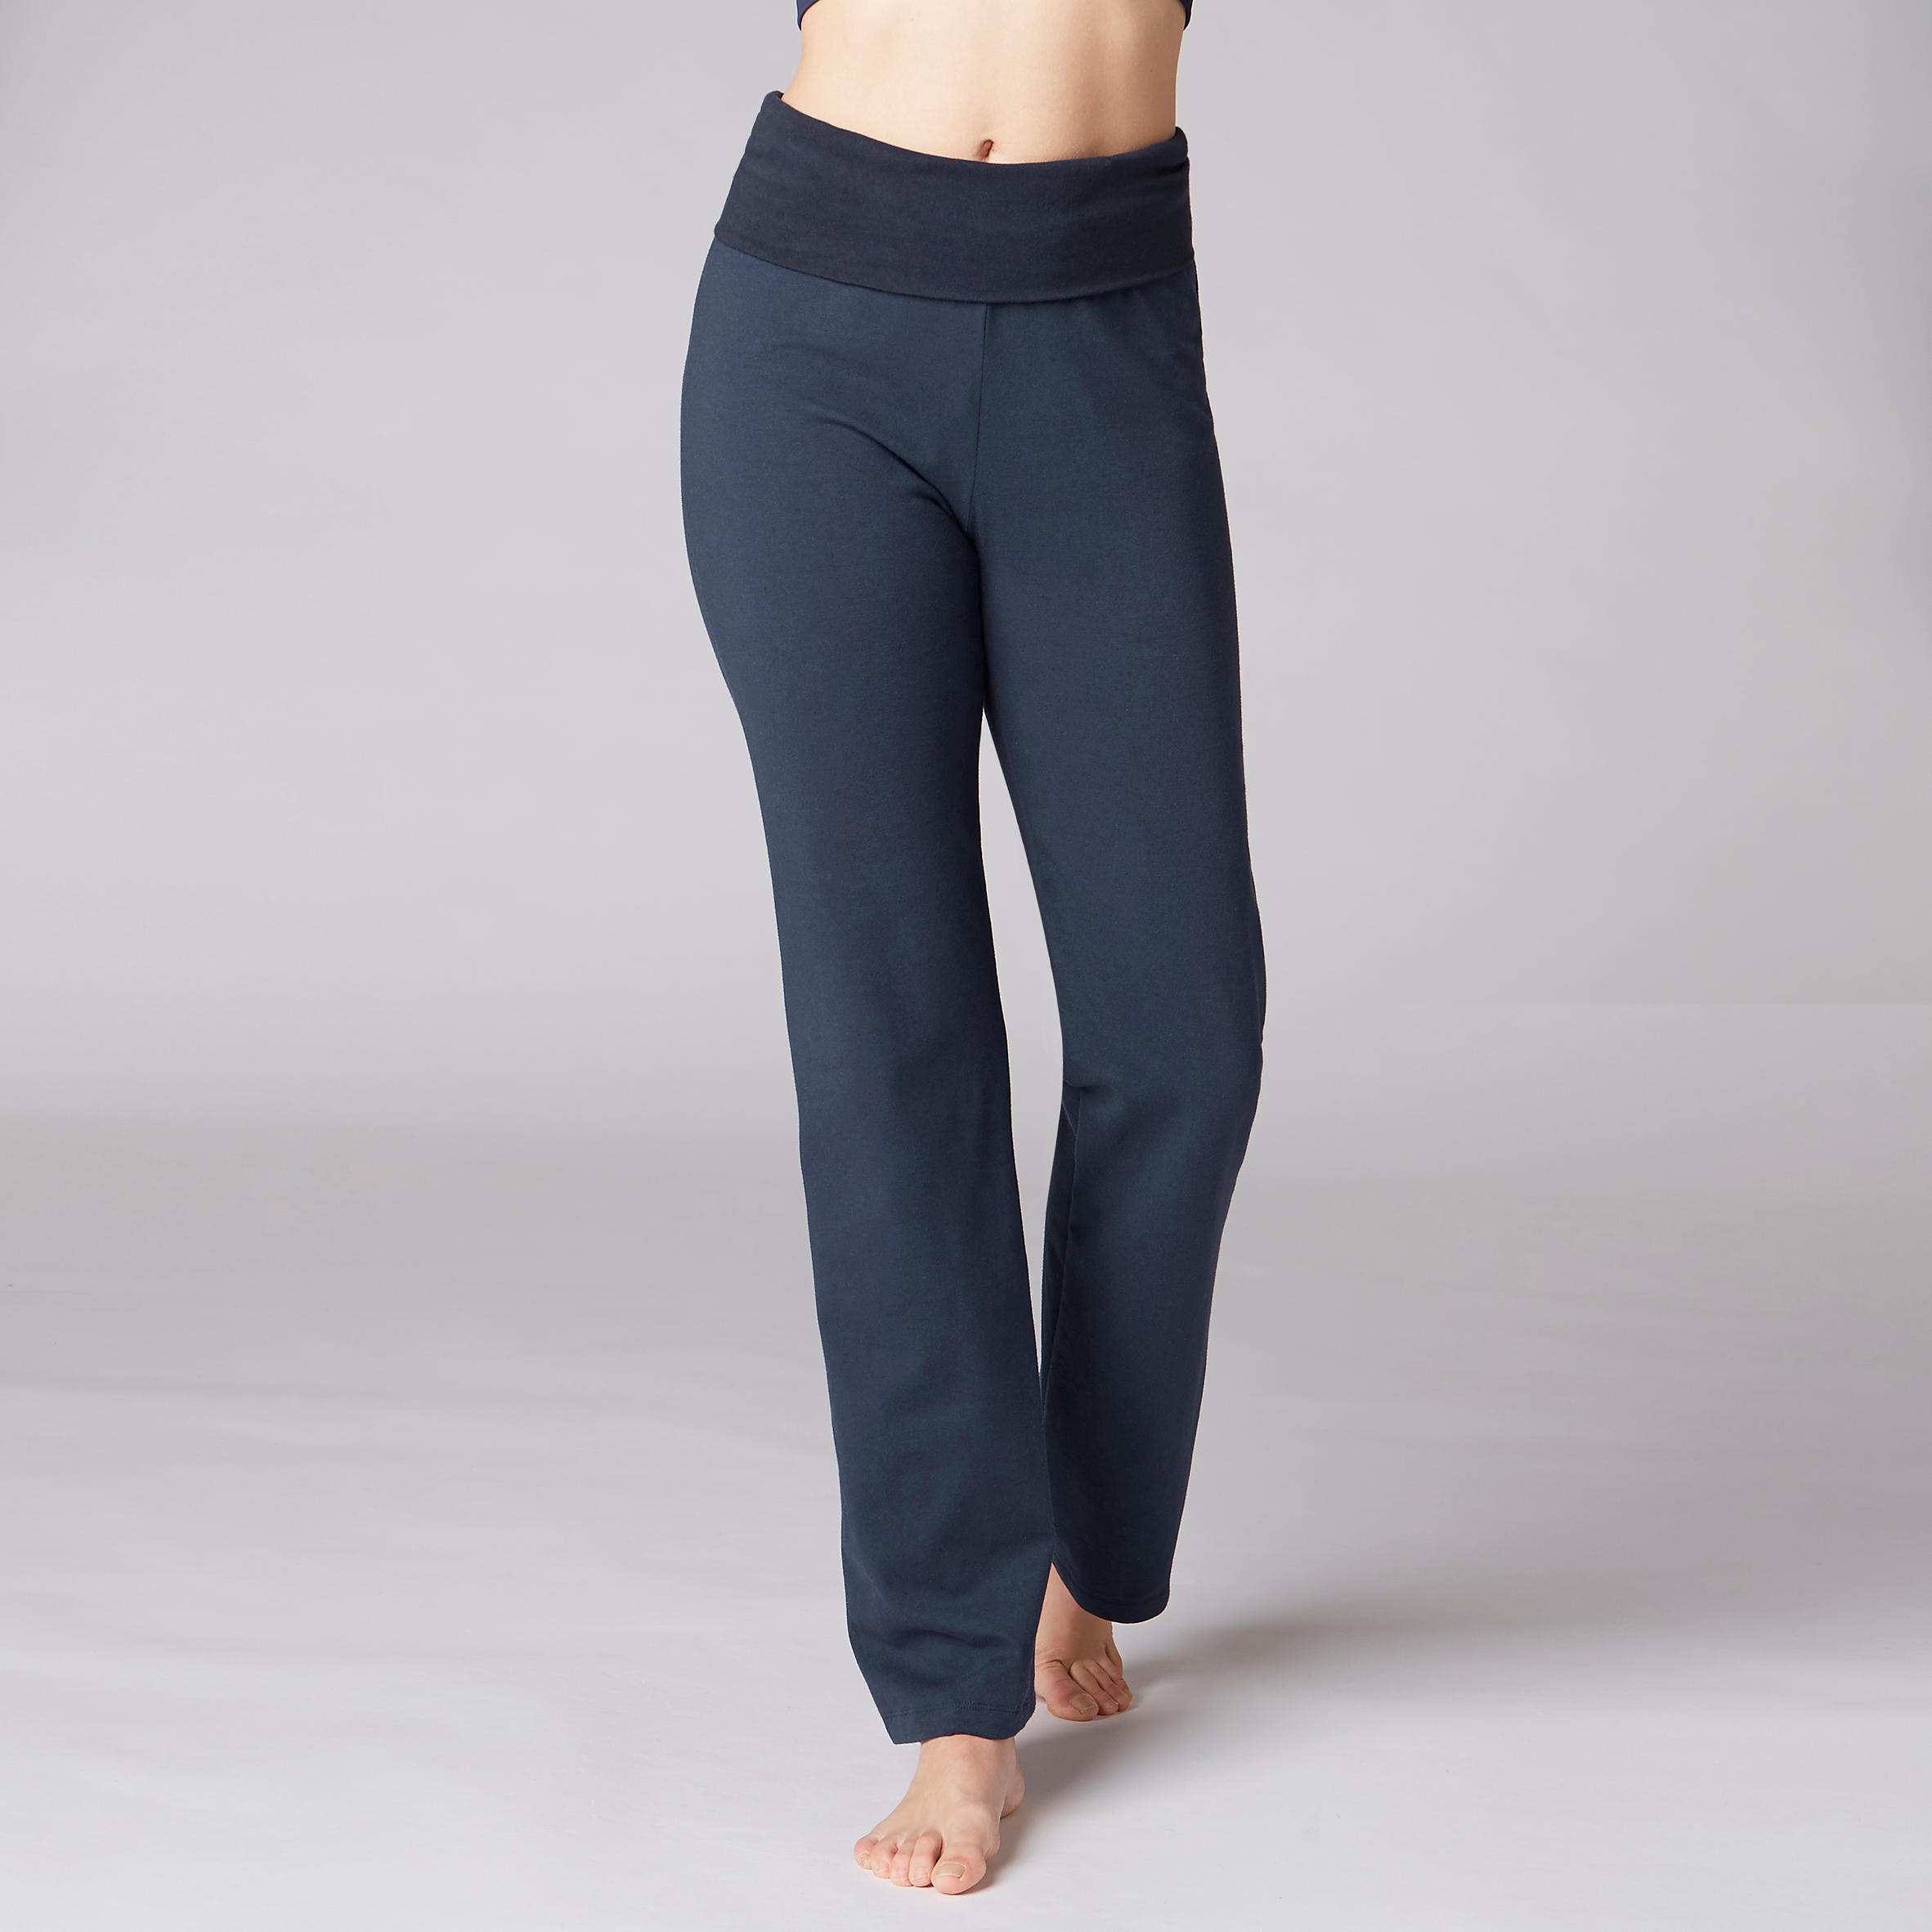 AMPOSH Women's Maternity Capri Yoga Pants High Waisted Naked Feeling Soft Workout Athletic Leggings with Pockets 